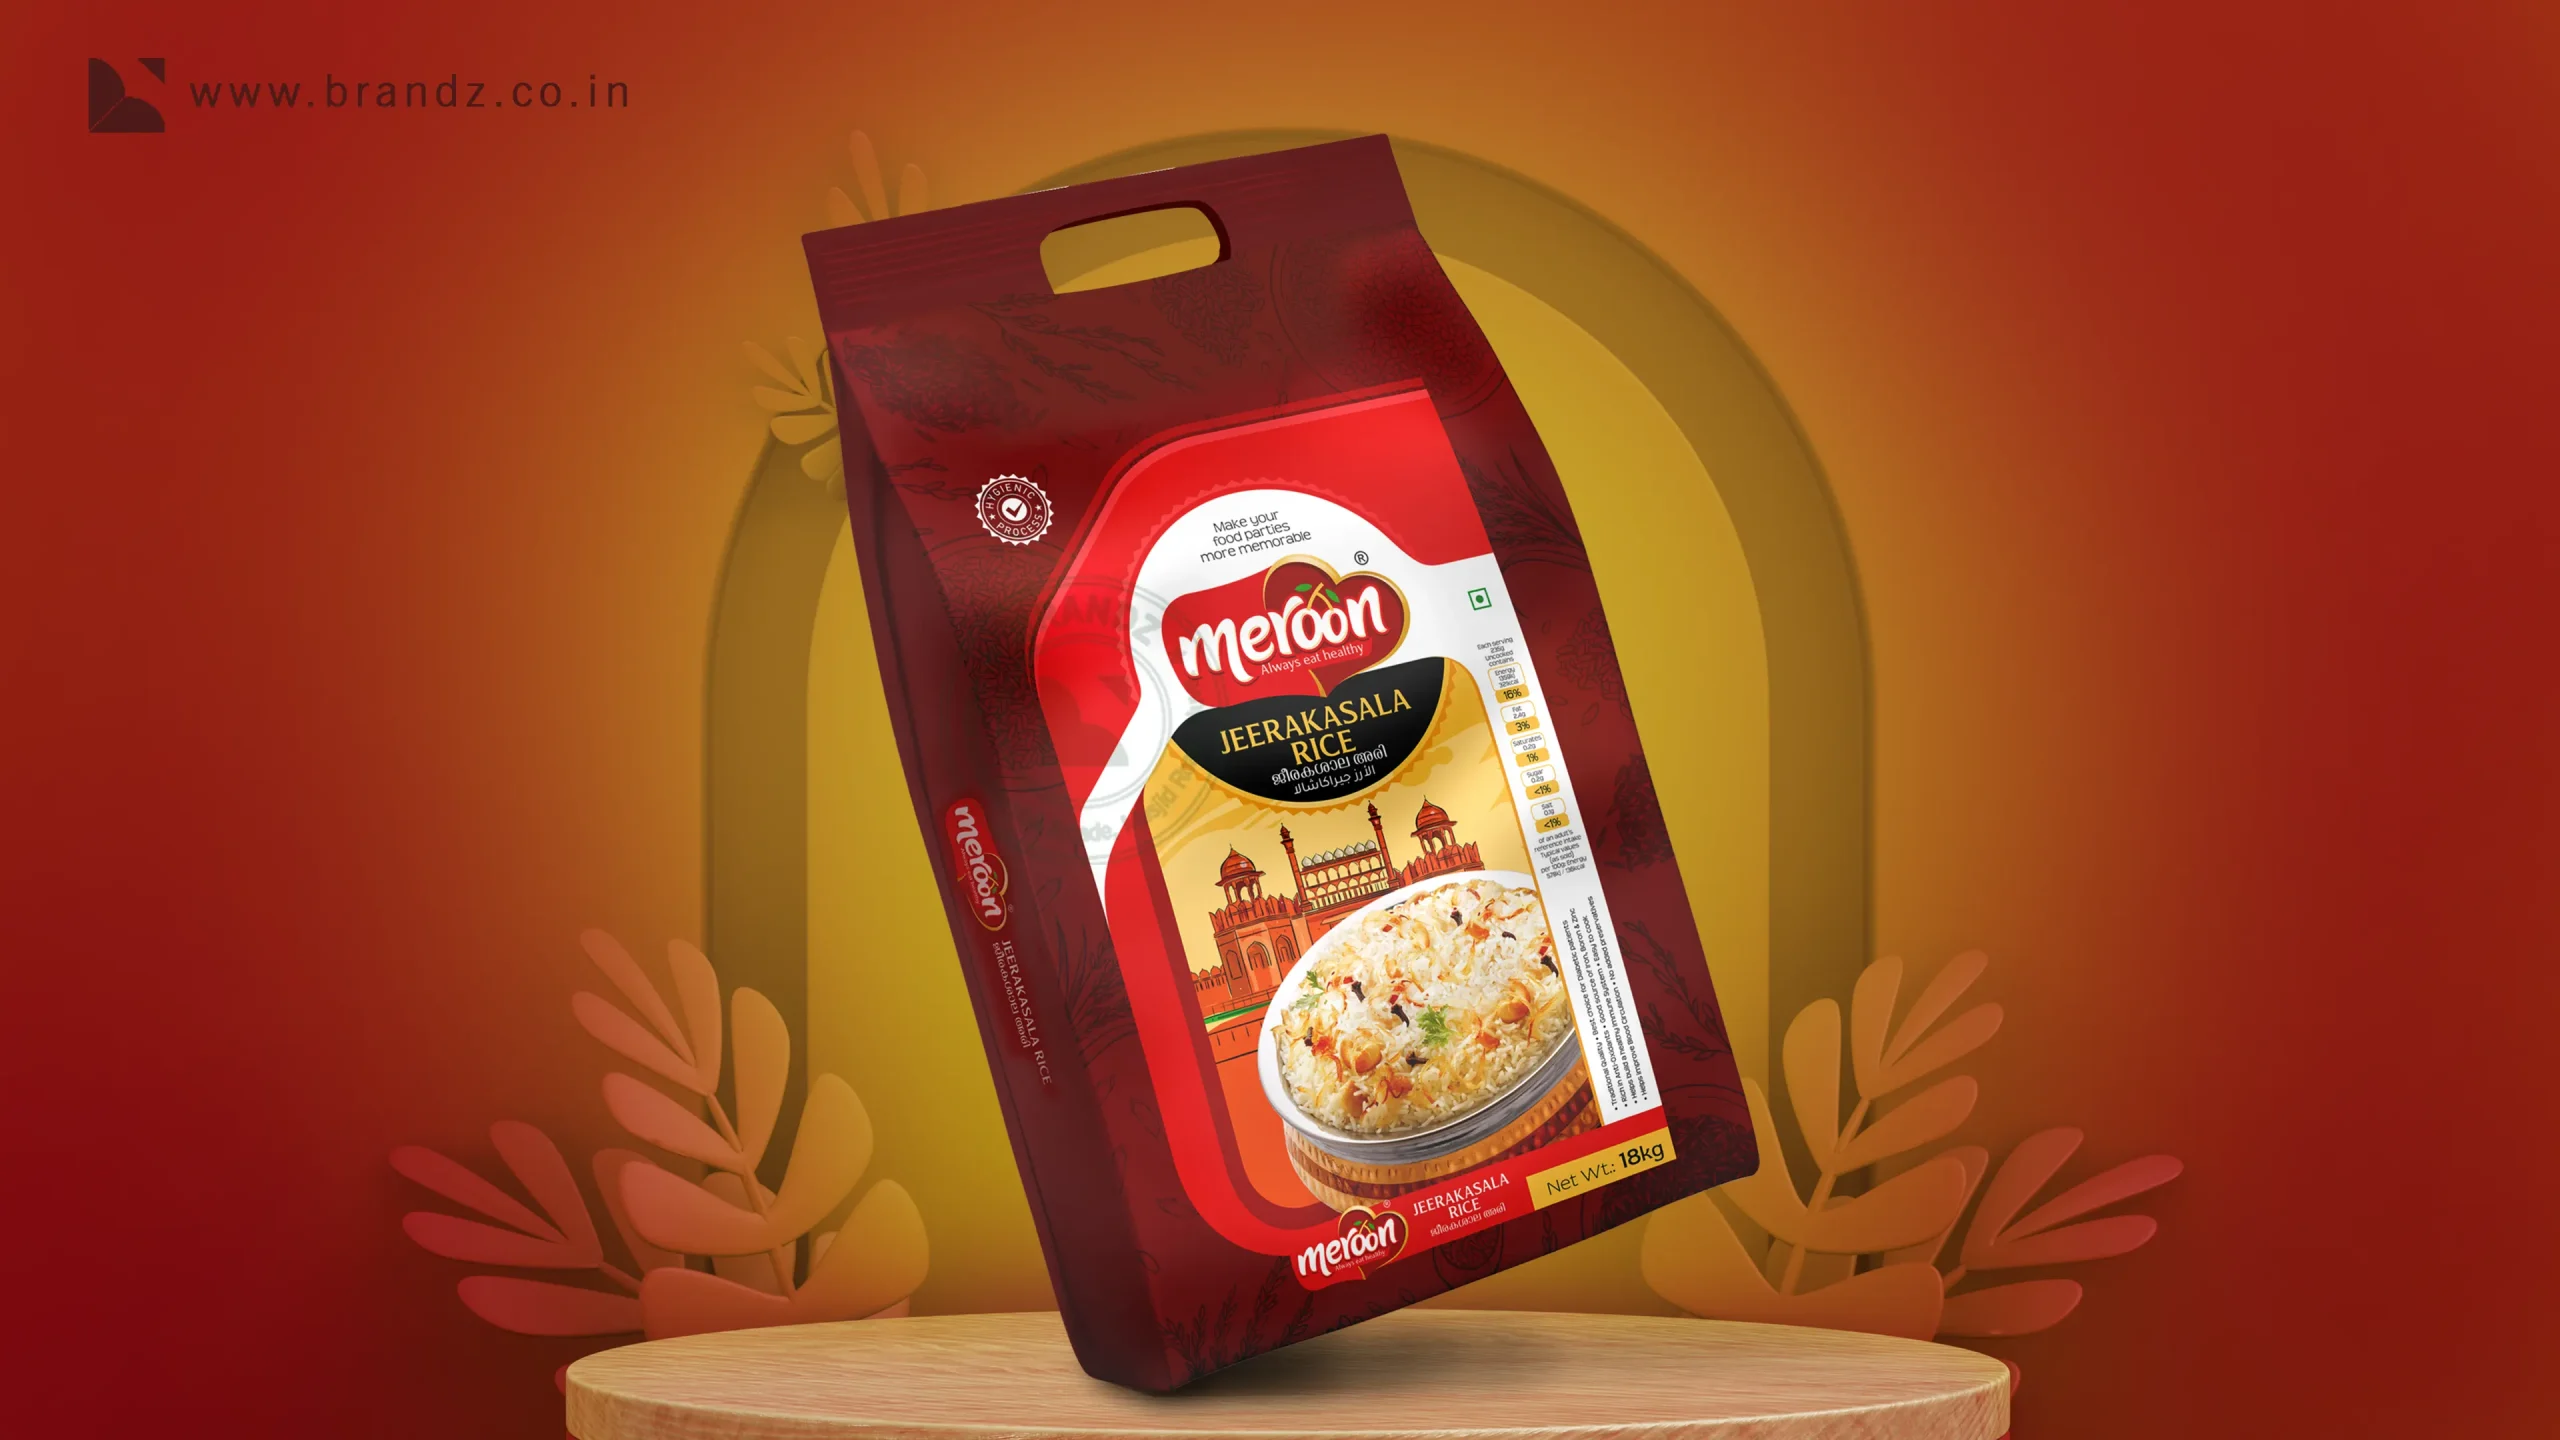 Meroon Jeerakasala Rice Bag